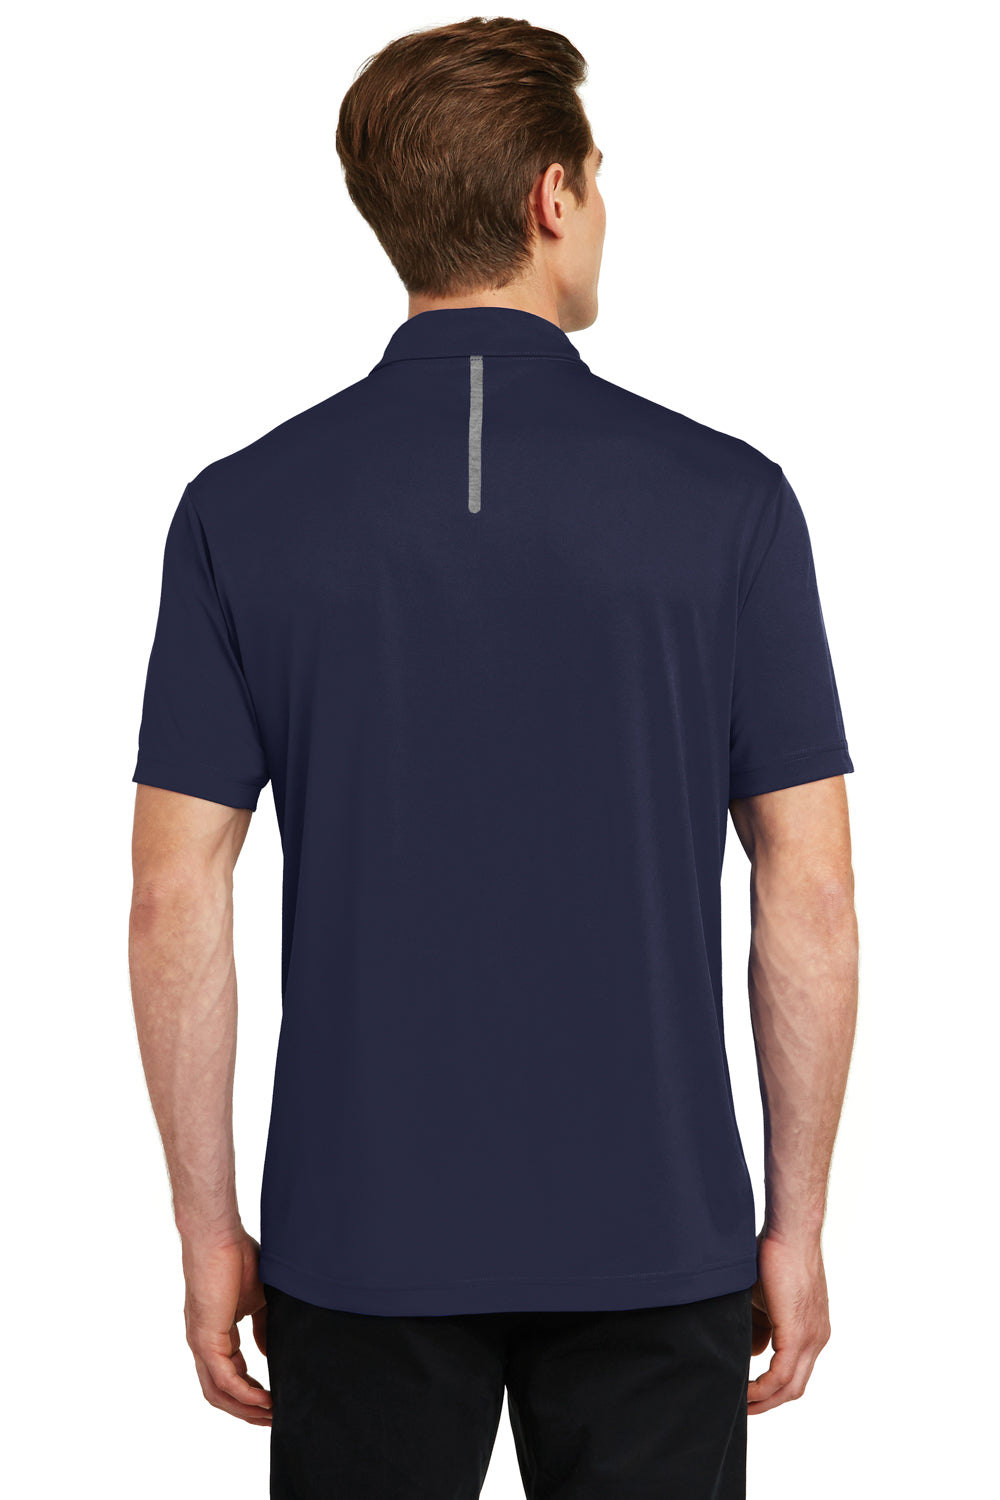 Sport-Tek ST620 Mens Tough Moisture Wicking Short Sleeve Polo Shirt Navy Blue/Heather Grey Back